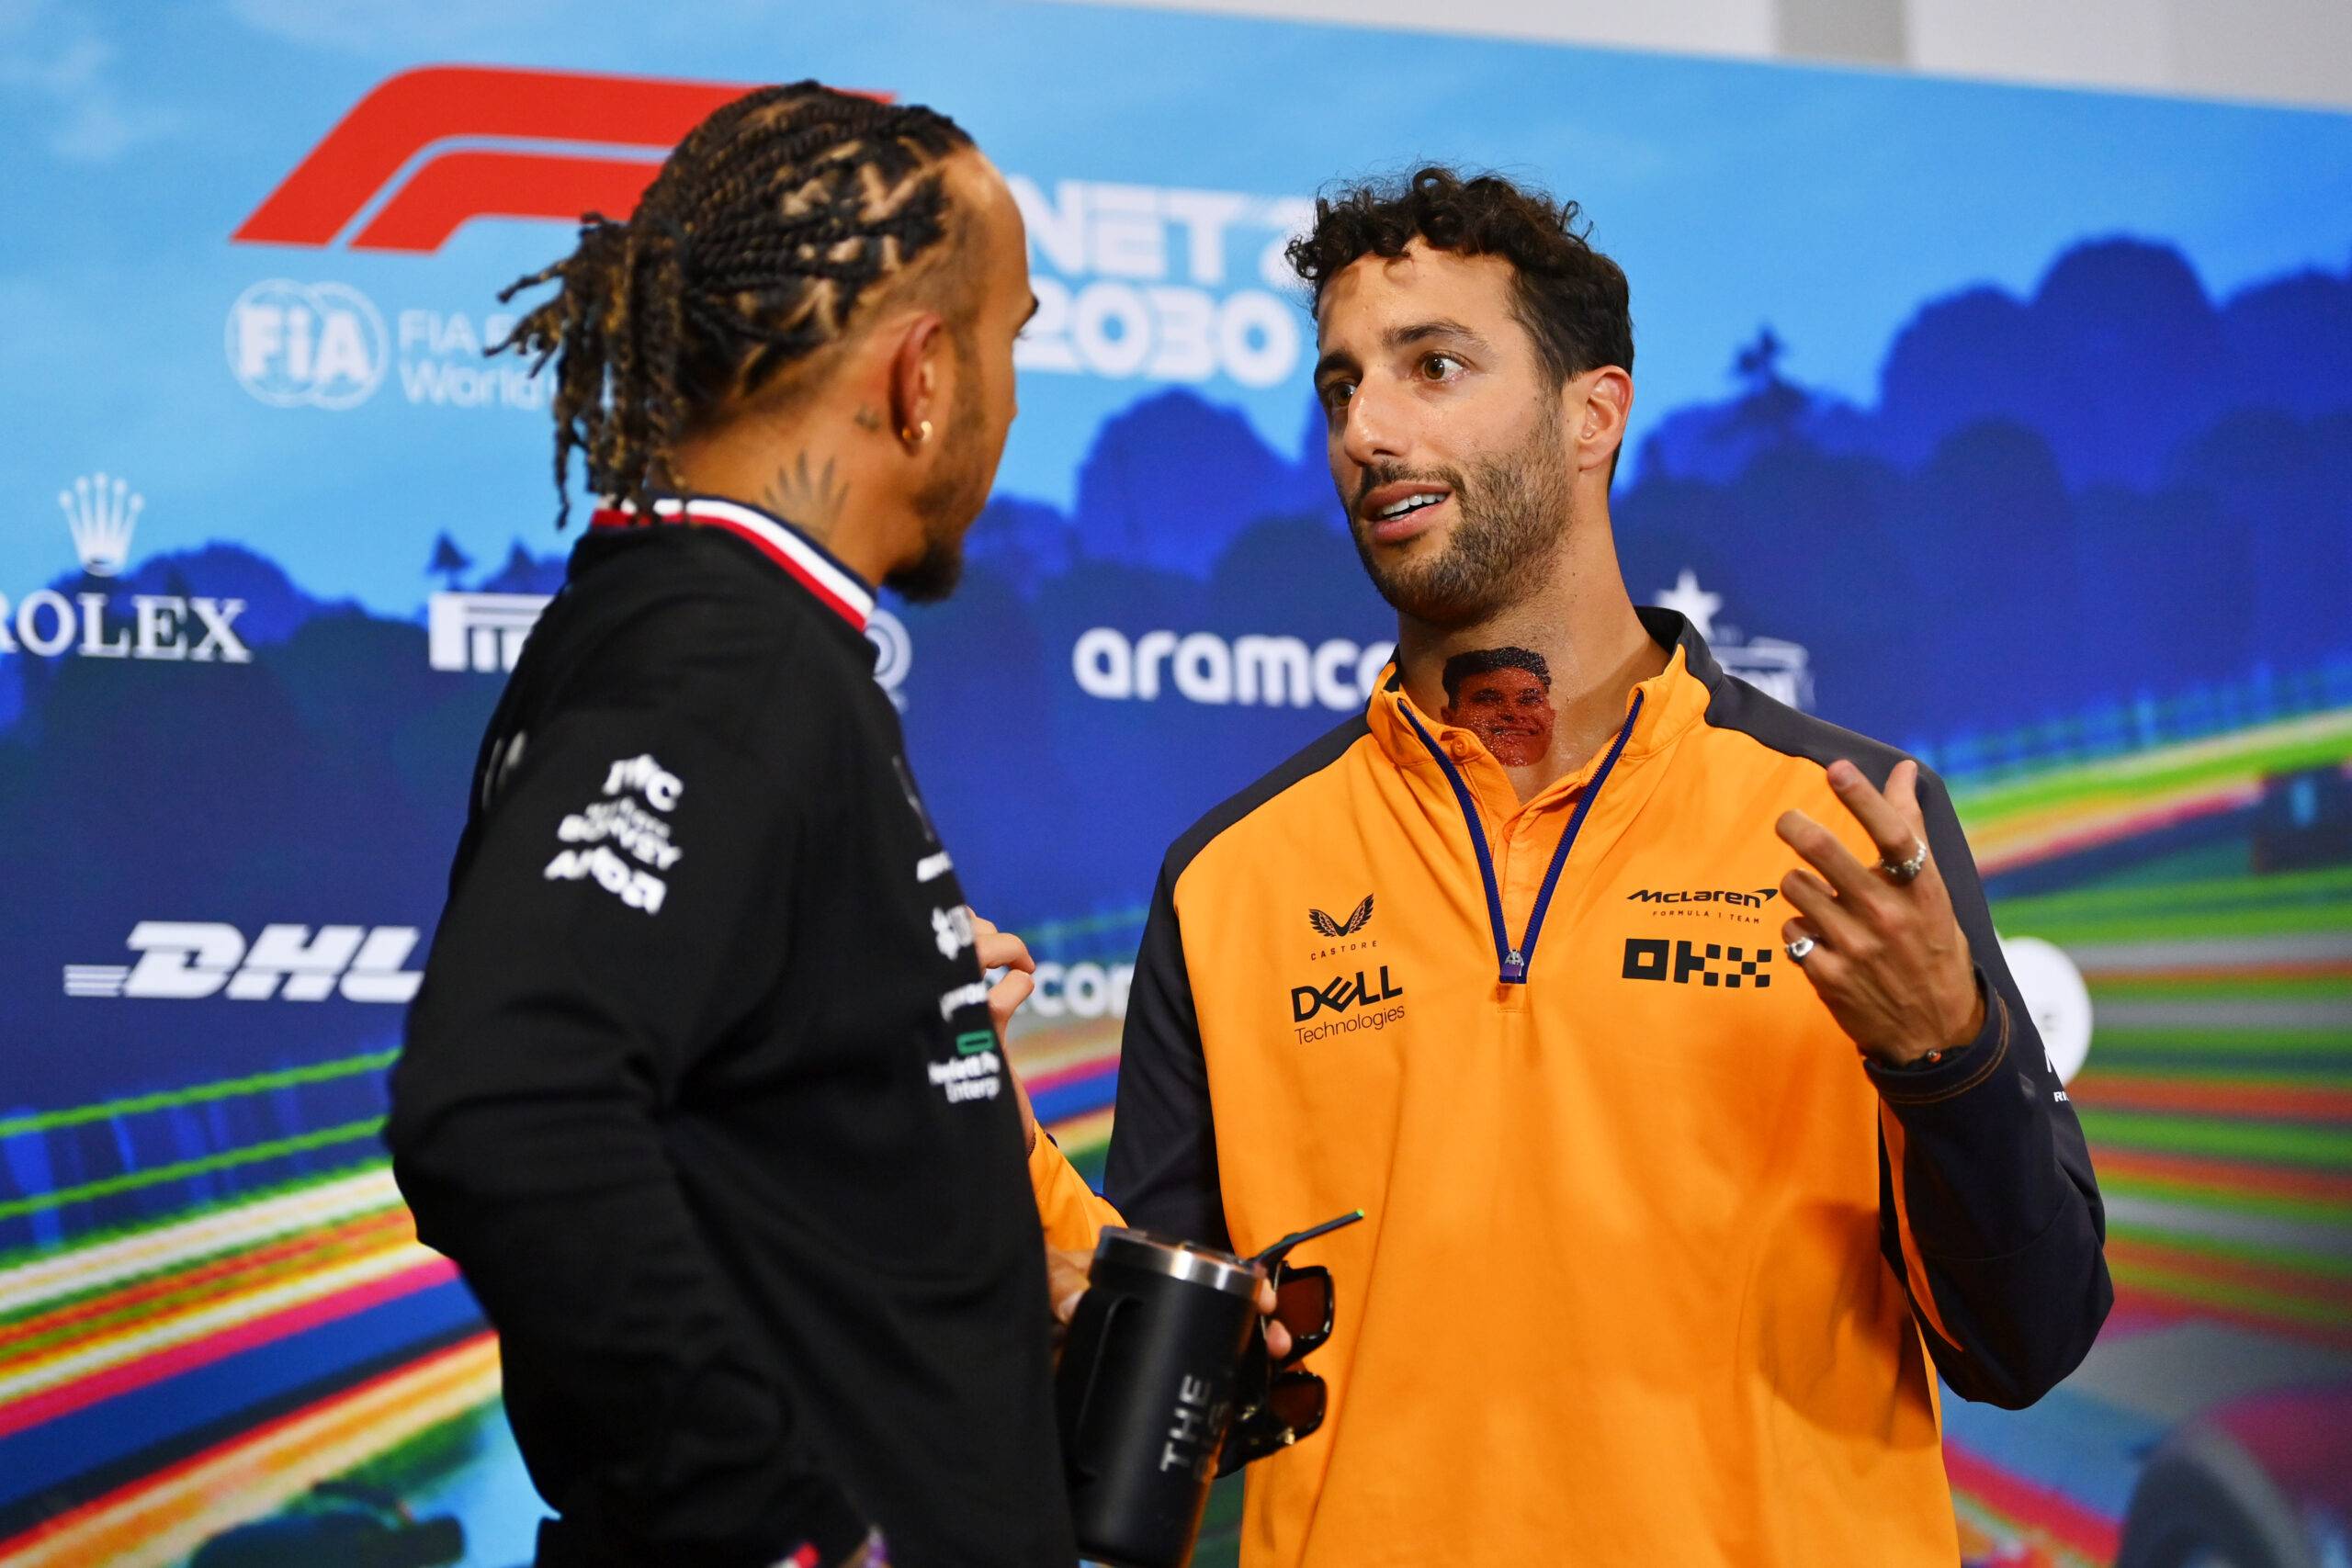 Lewis Hamilton & Daniel Ricciardo chat at the Italian GP